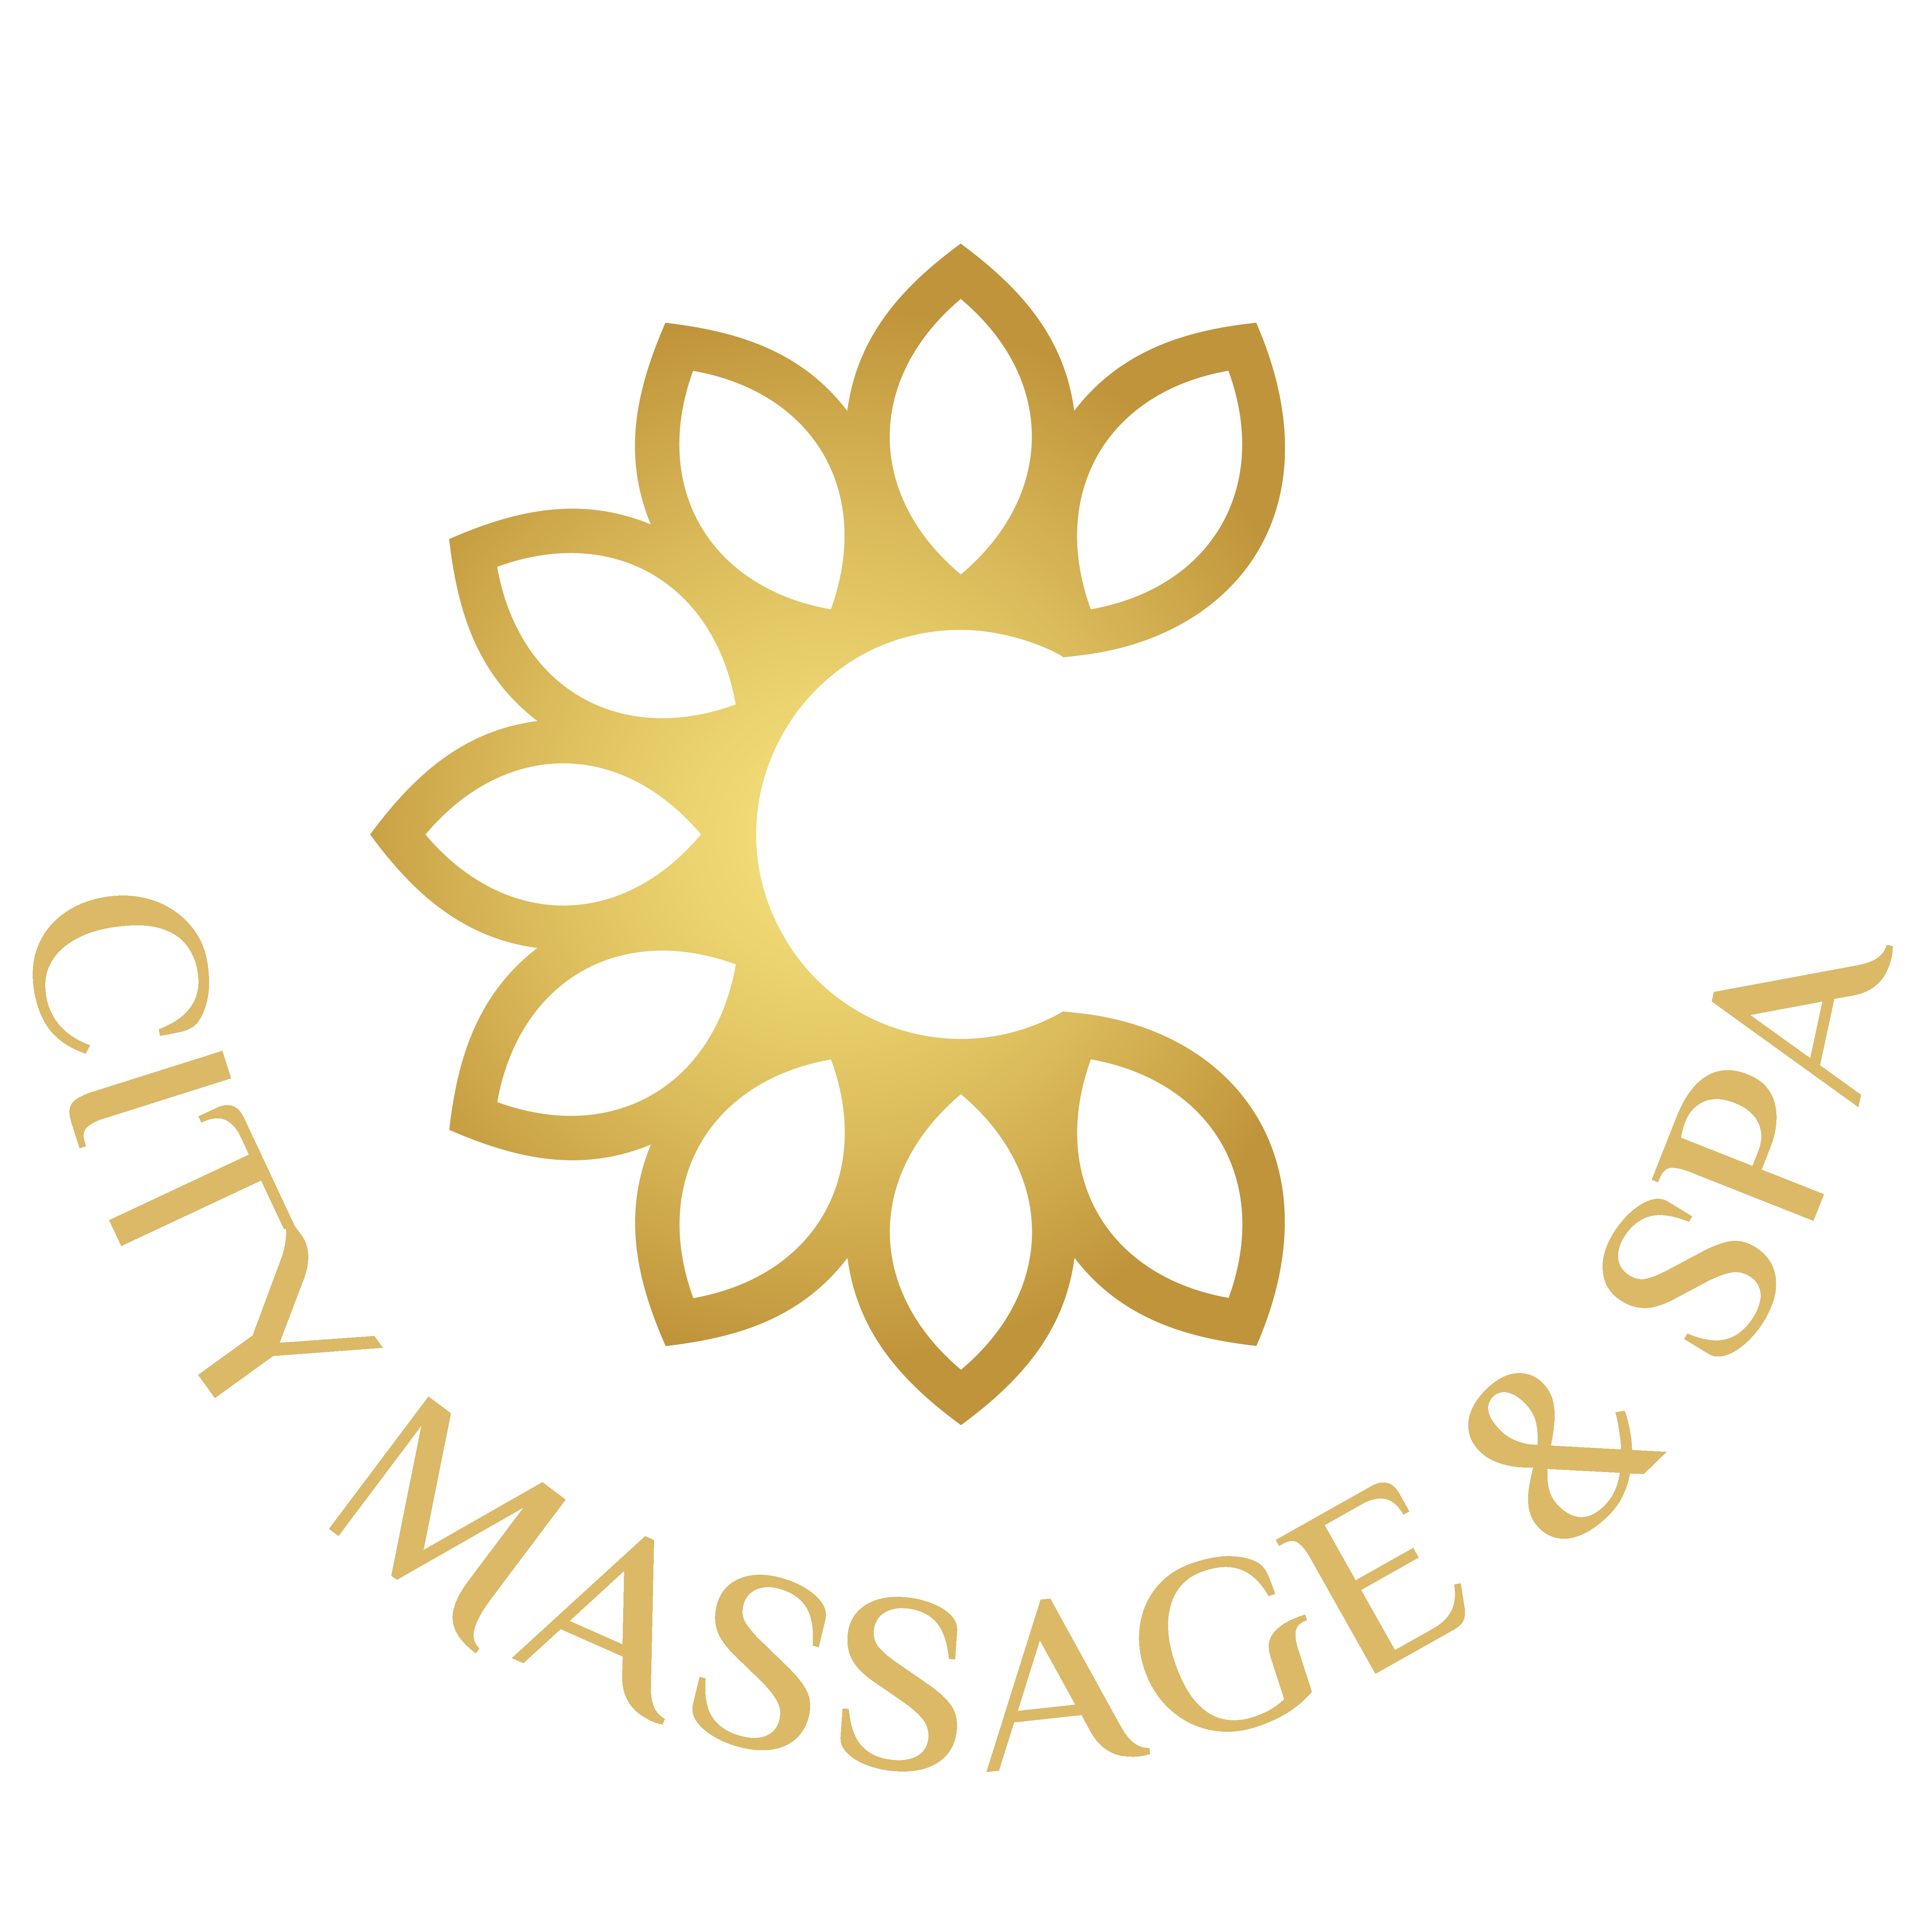 City Massage and Spa Profile Picture